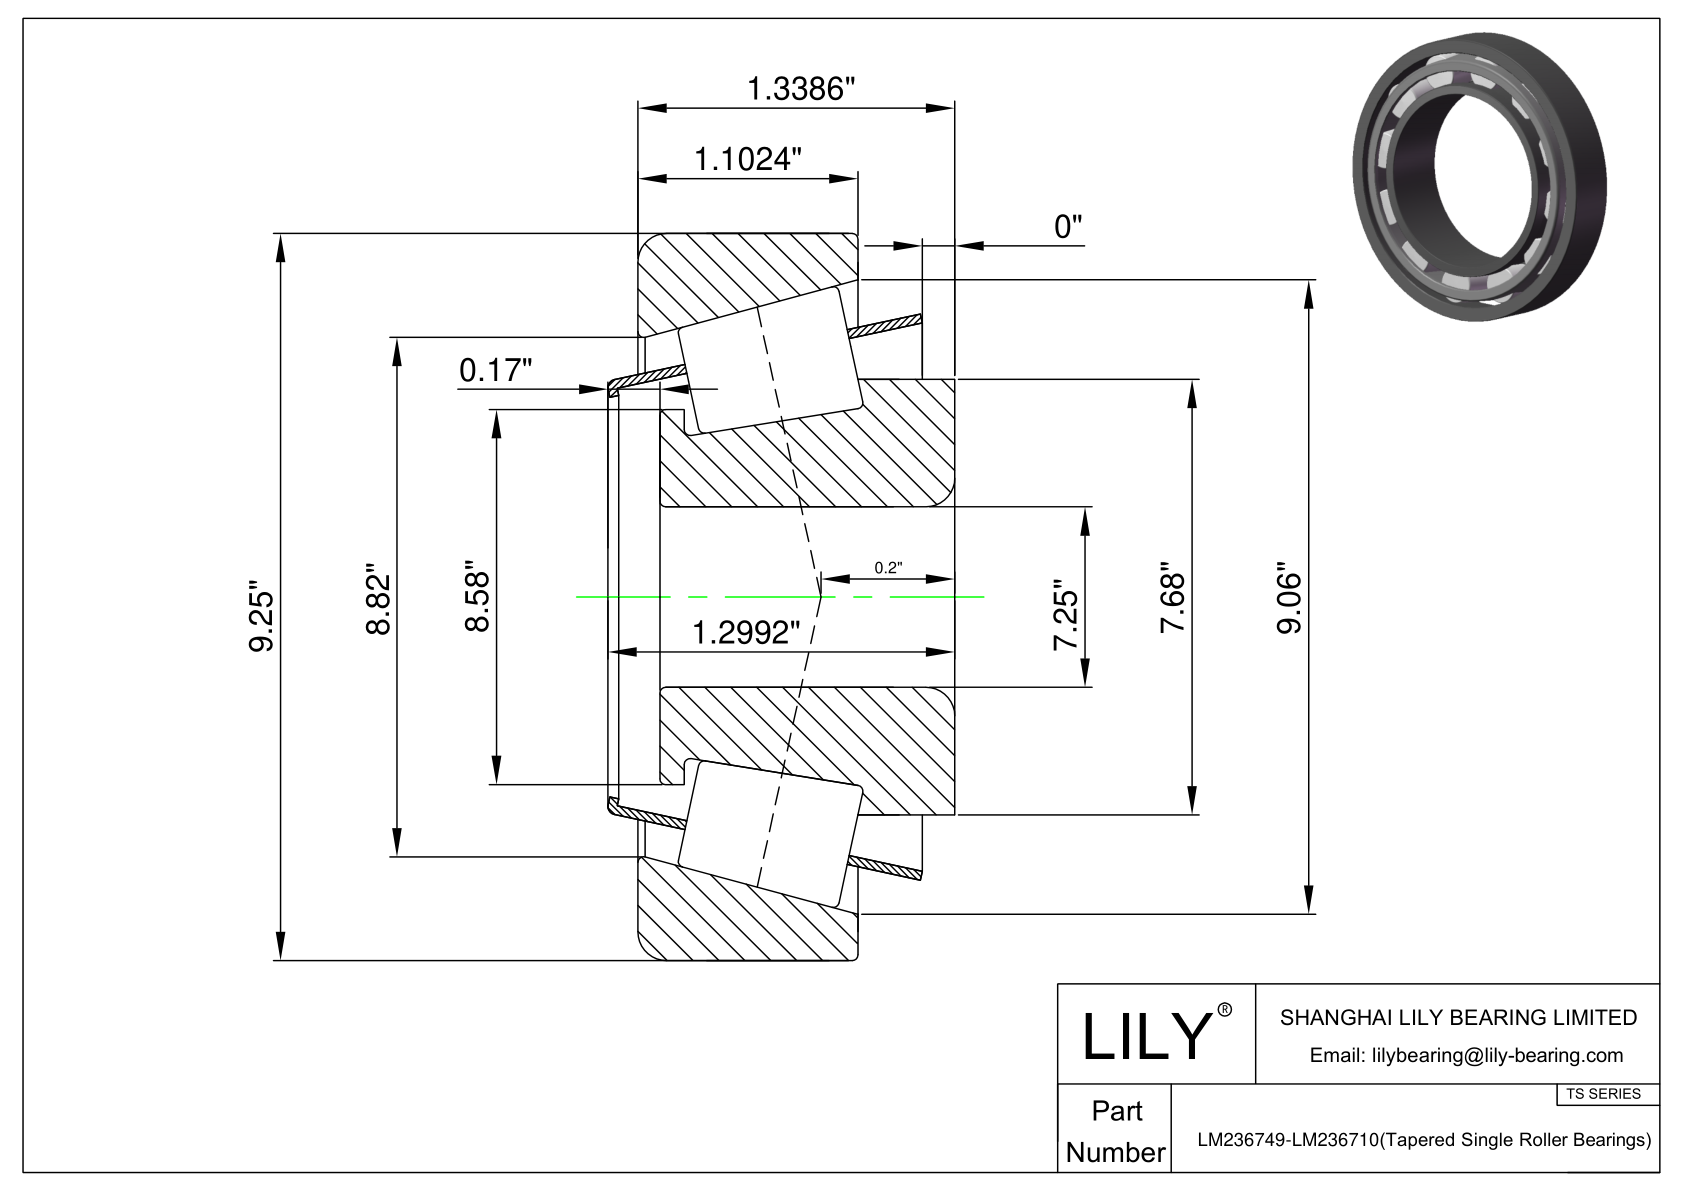 LM236749-LM236710 TS系列(圆锥单滚子轴承)(英制) CAD图形